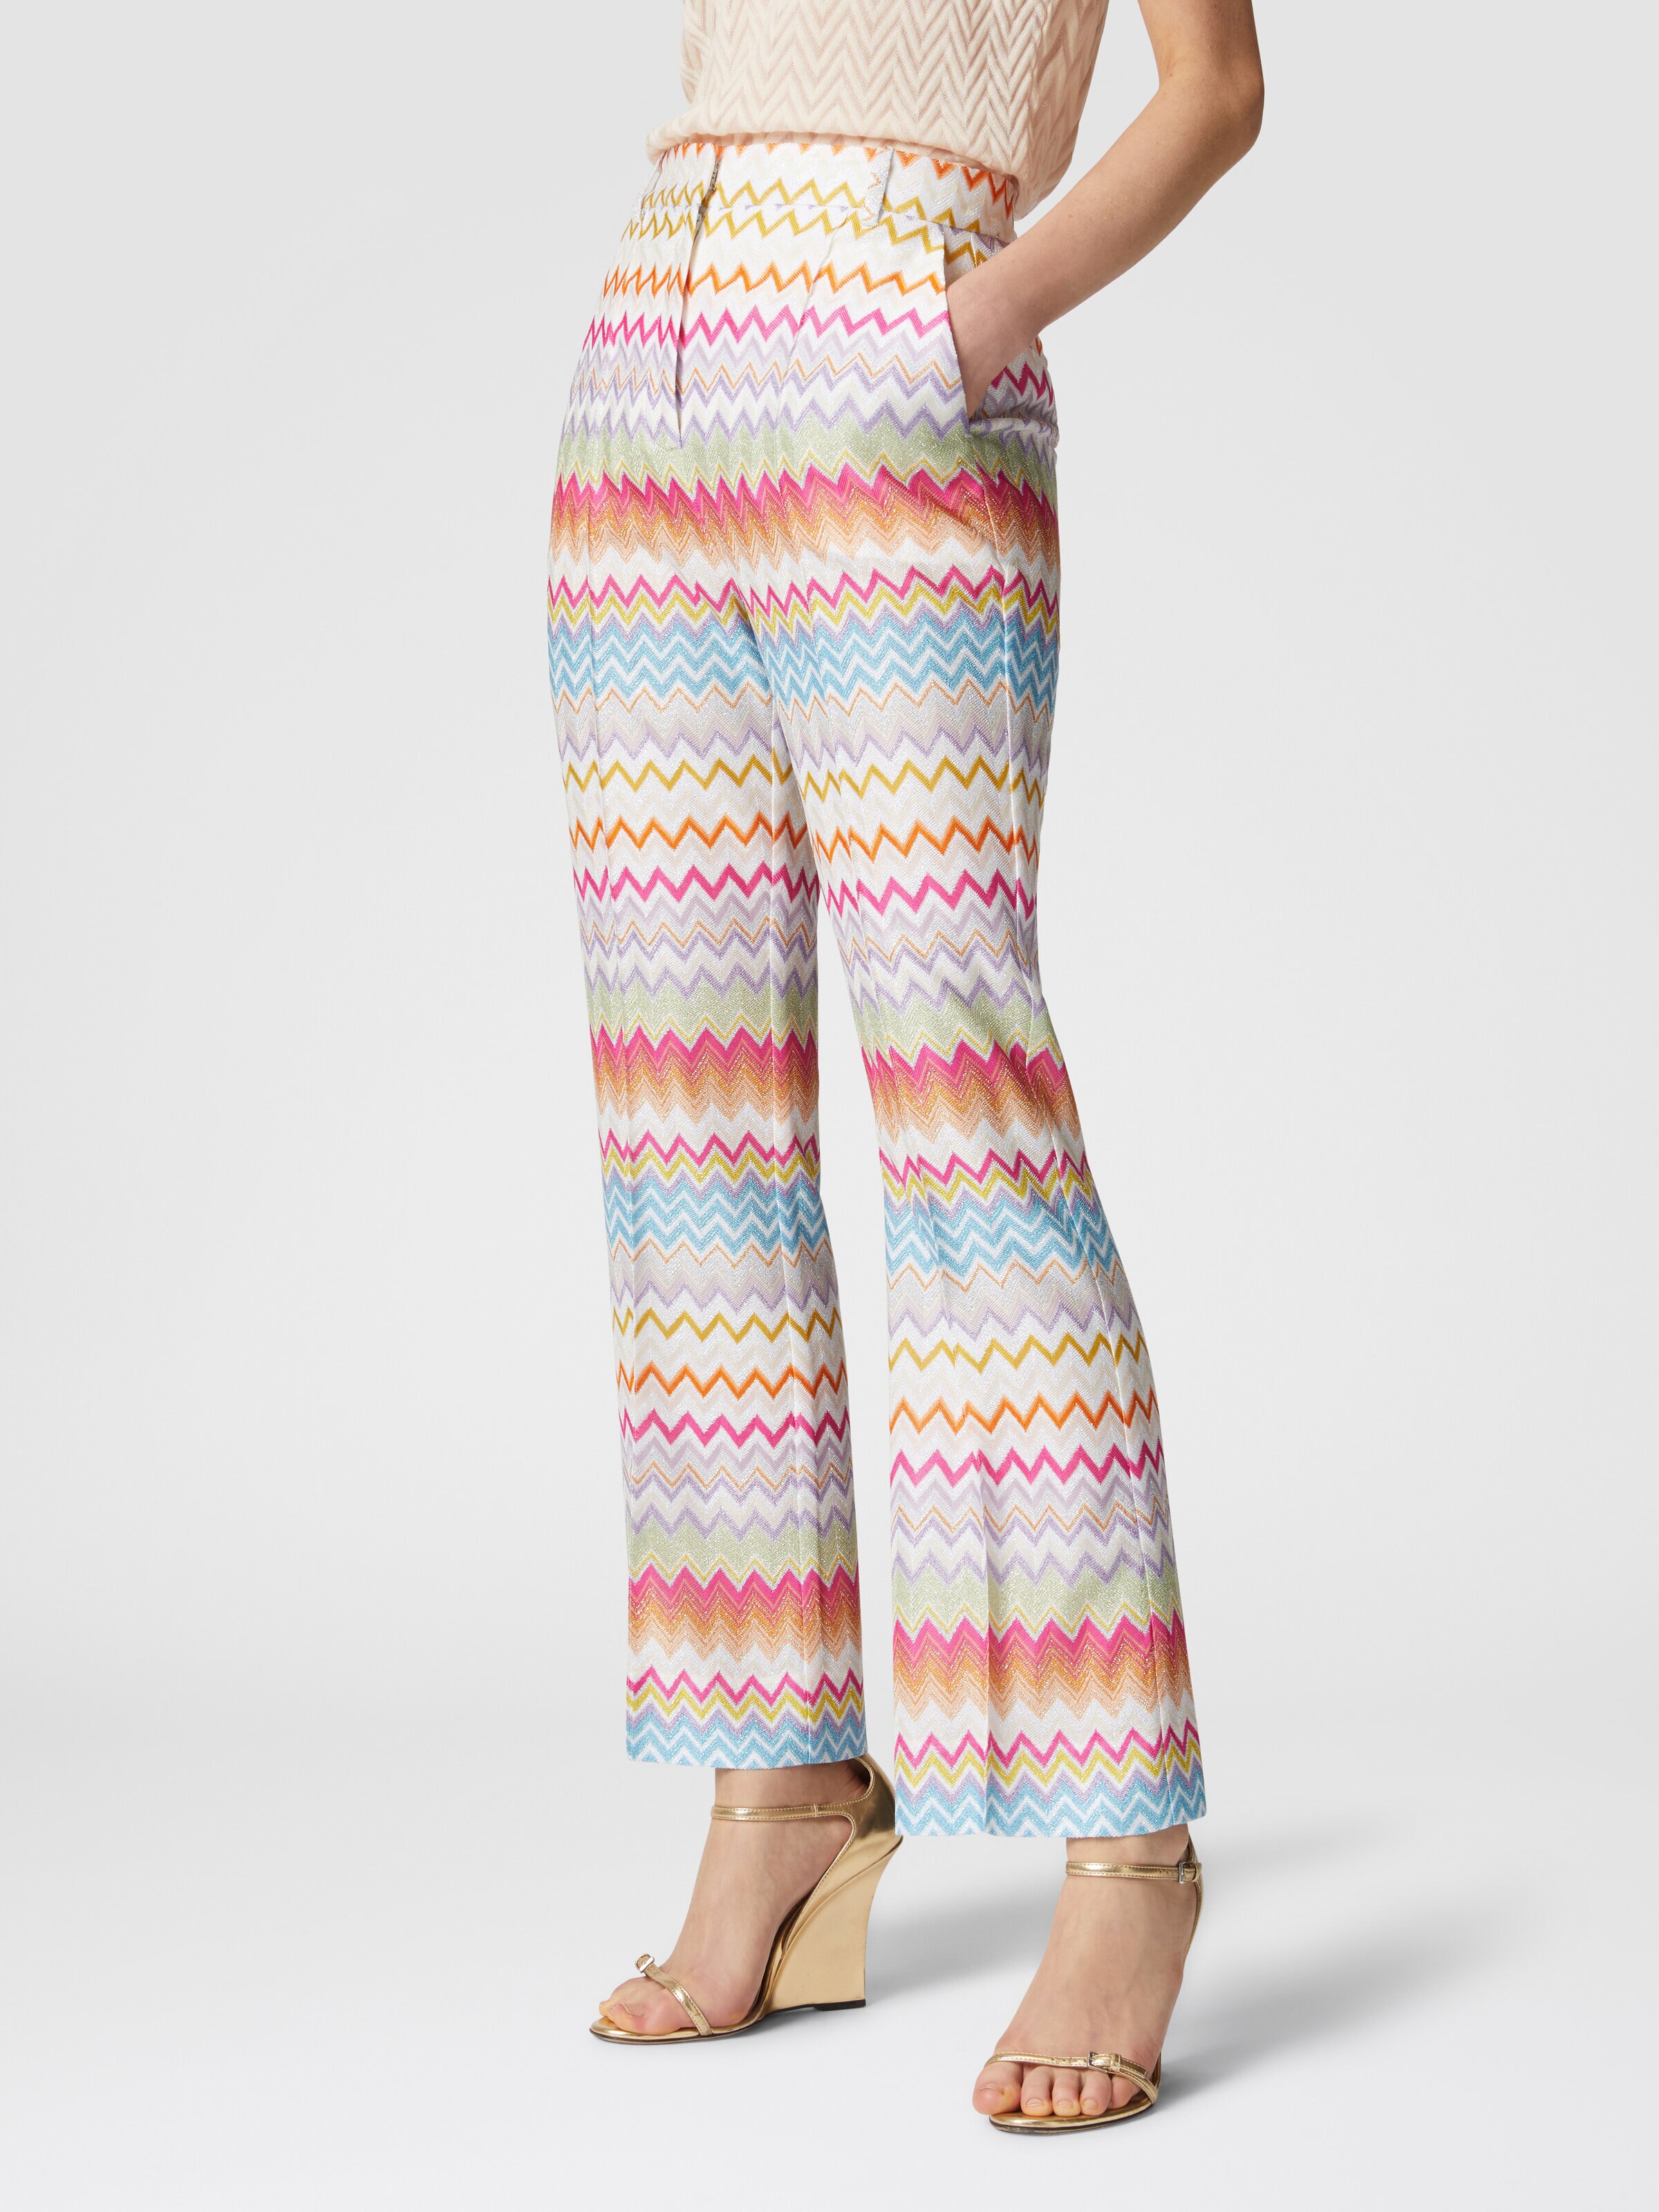 Capri trousers in chevron lamé knit with sequins, Multicoloured  - 3